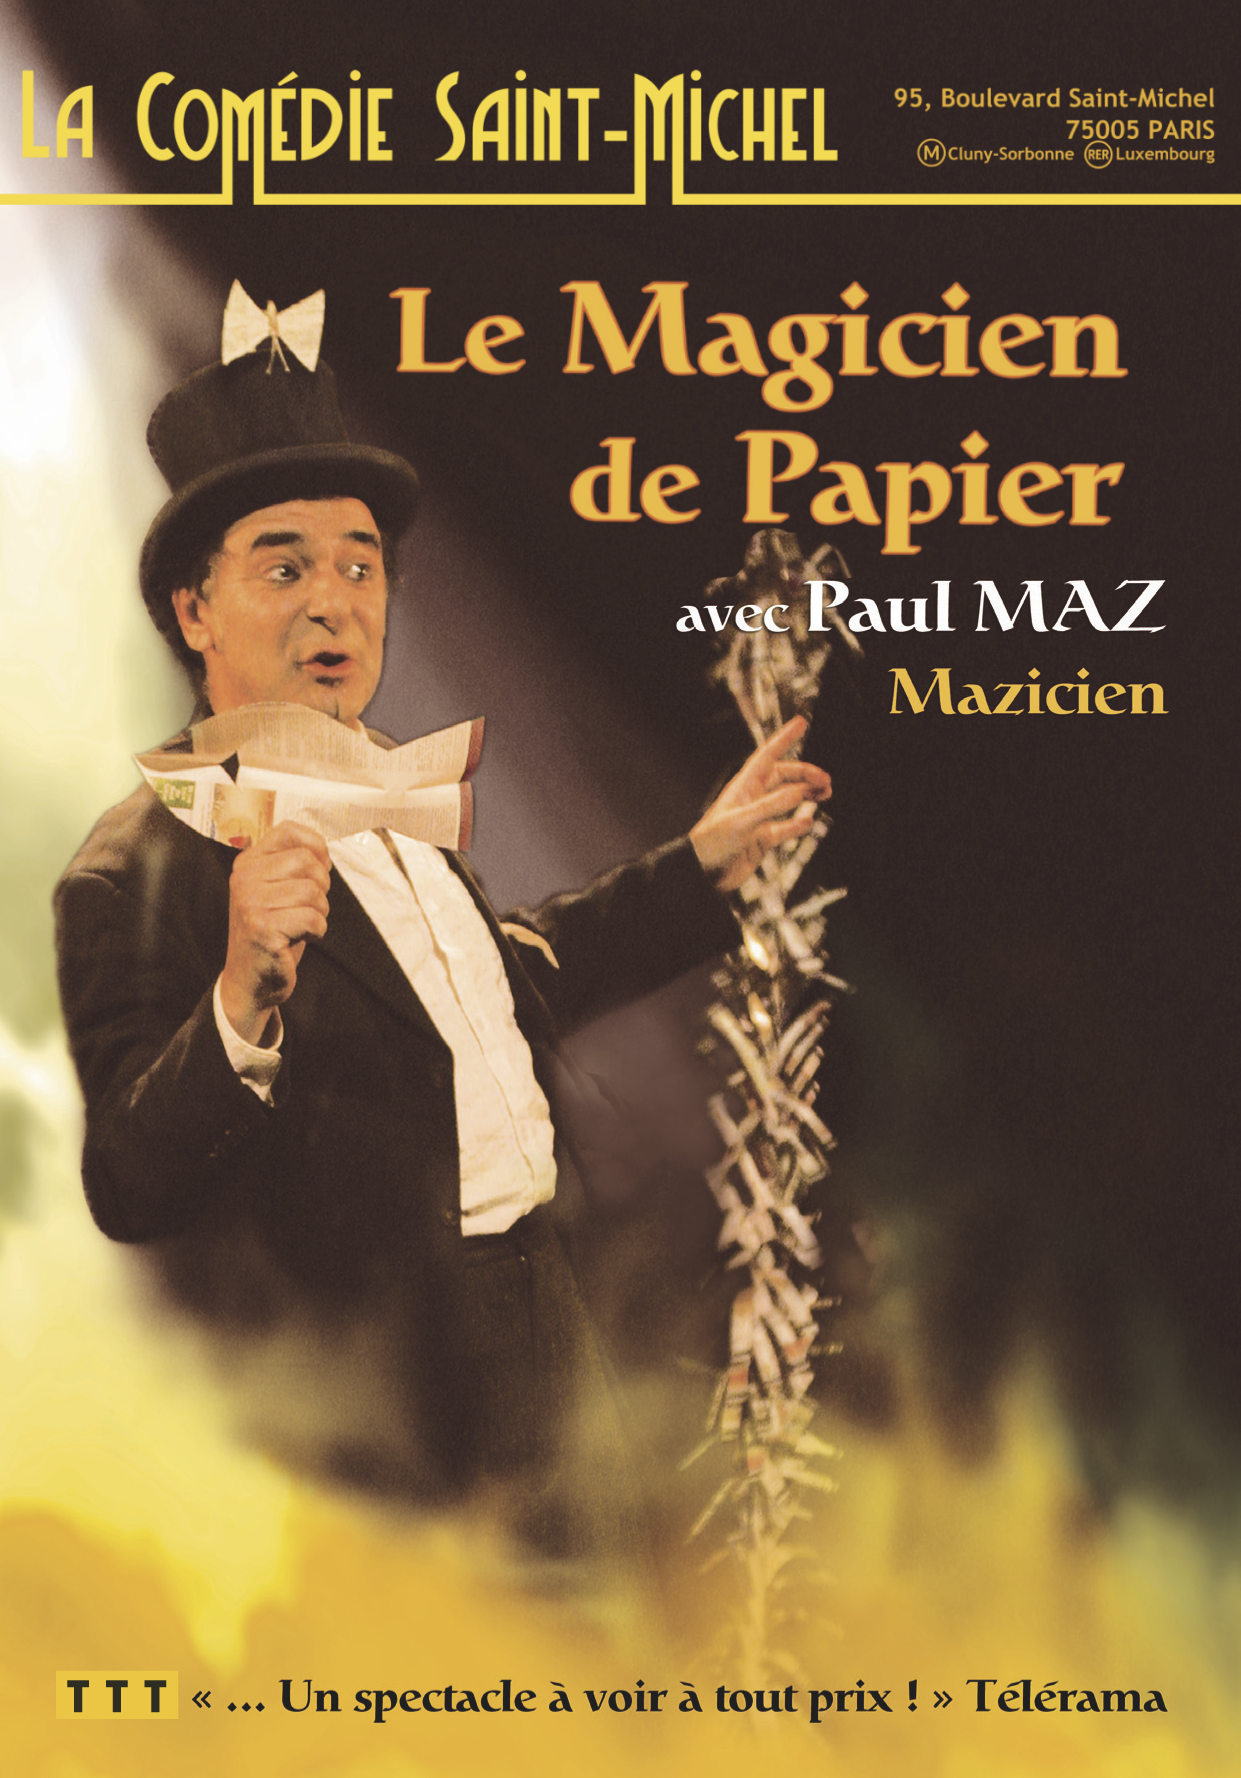 Poster Chapeau de magicien